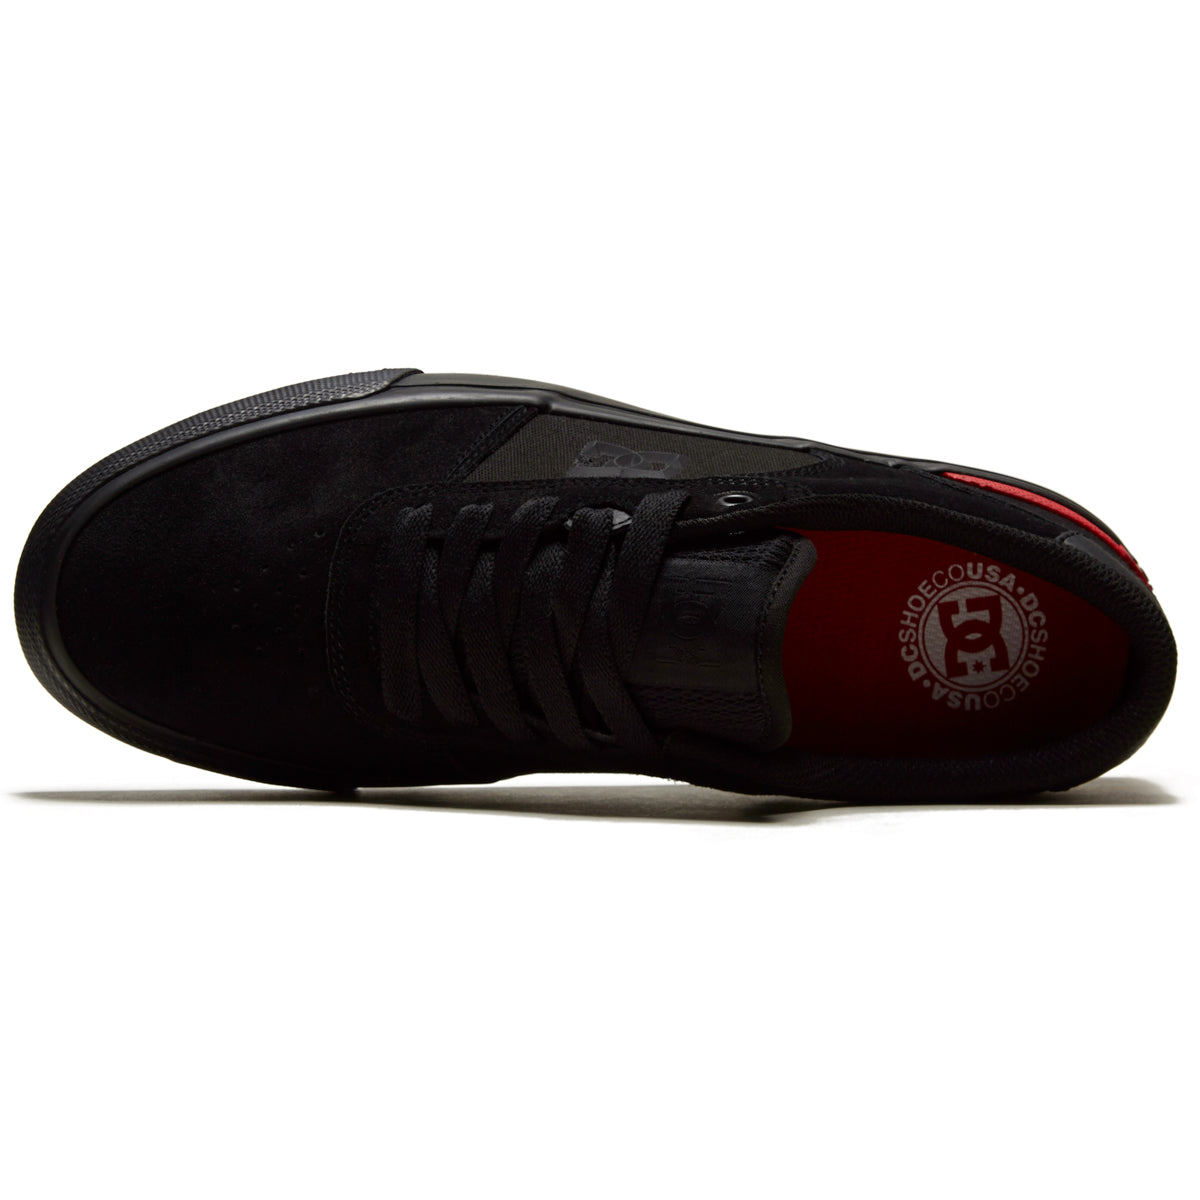 DC Teknic S Shoes - Black/Black/Red image 3